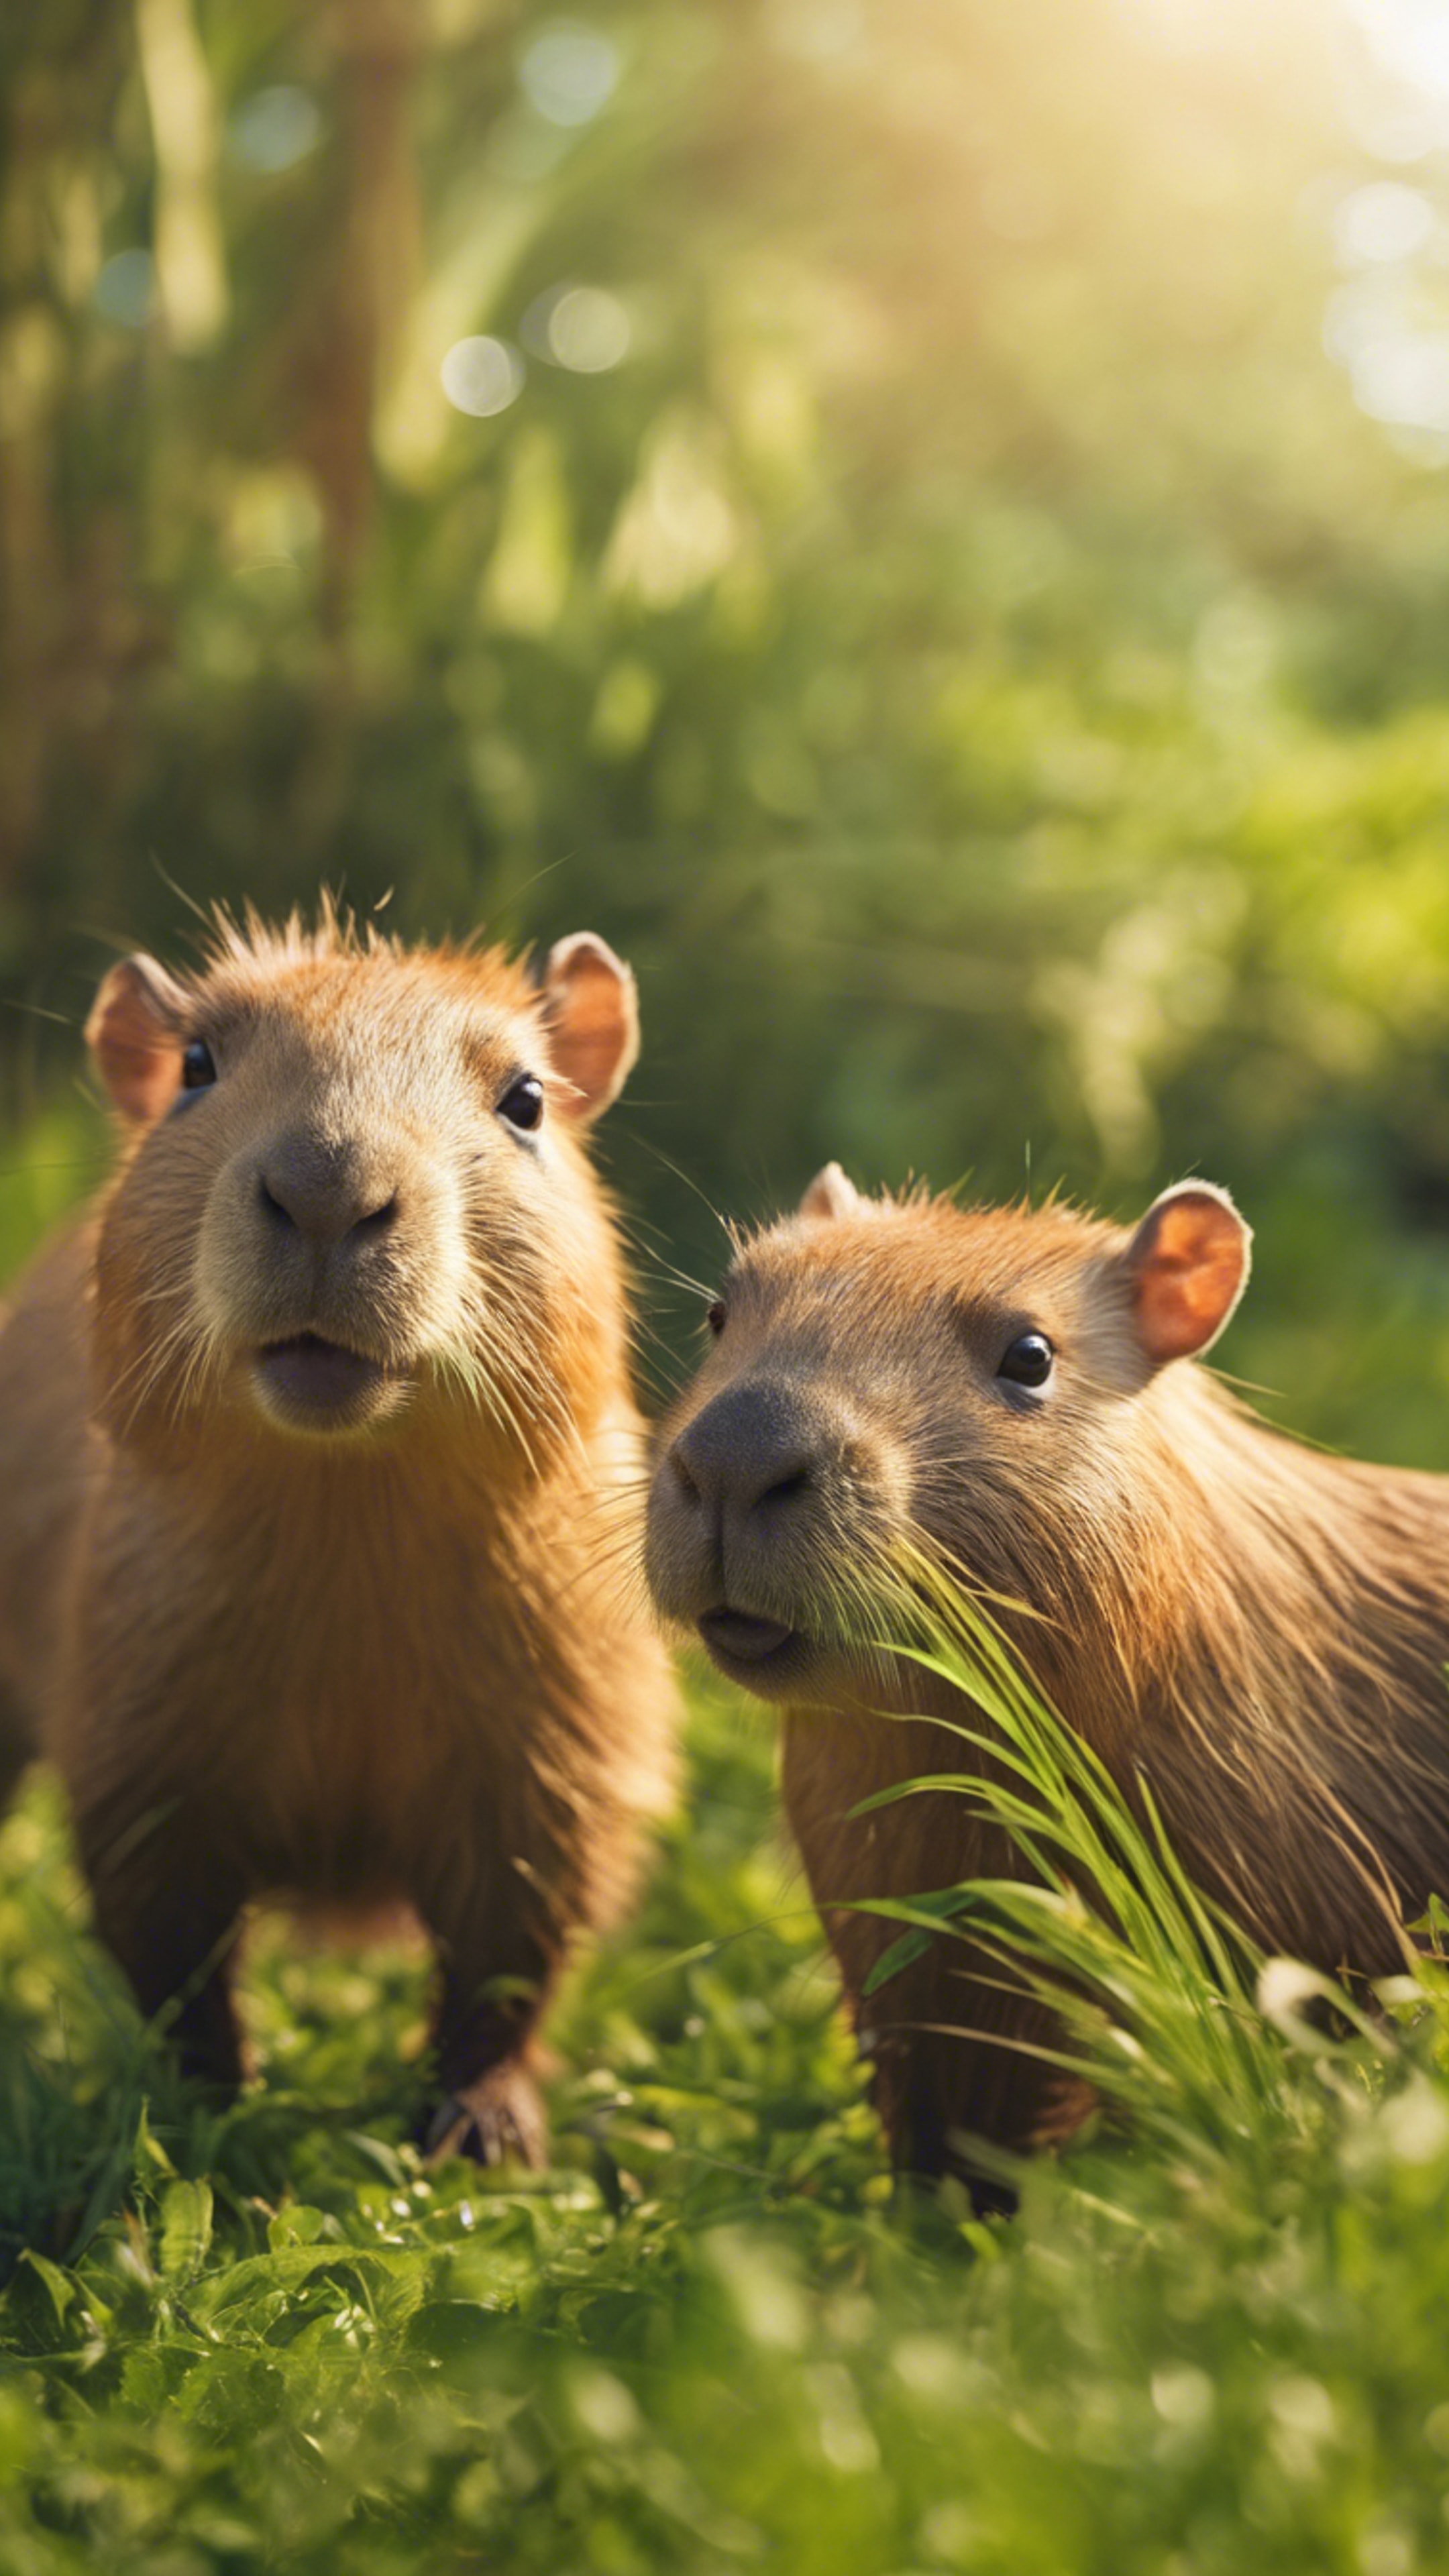 A group of playful capybara kids in a lush green meadow under the warm sunlight. Tapeta[941f99d4da544970bae4]